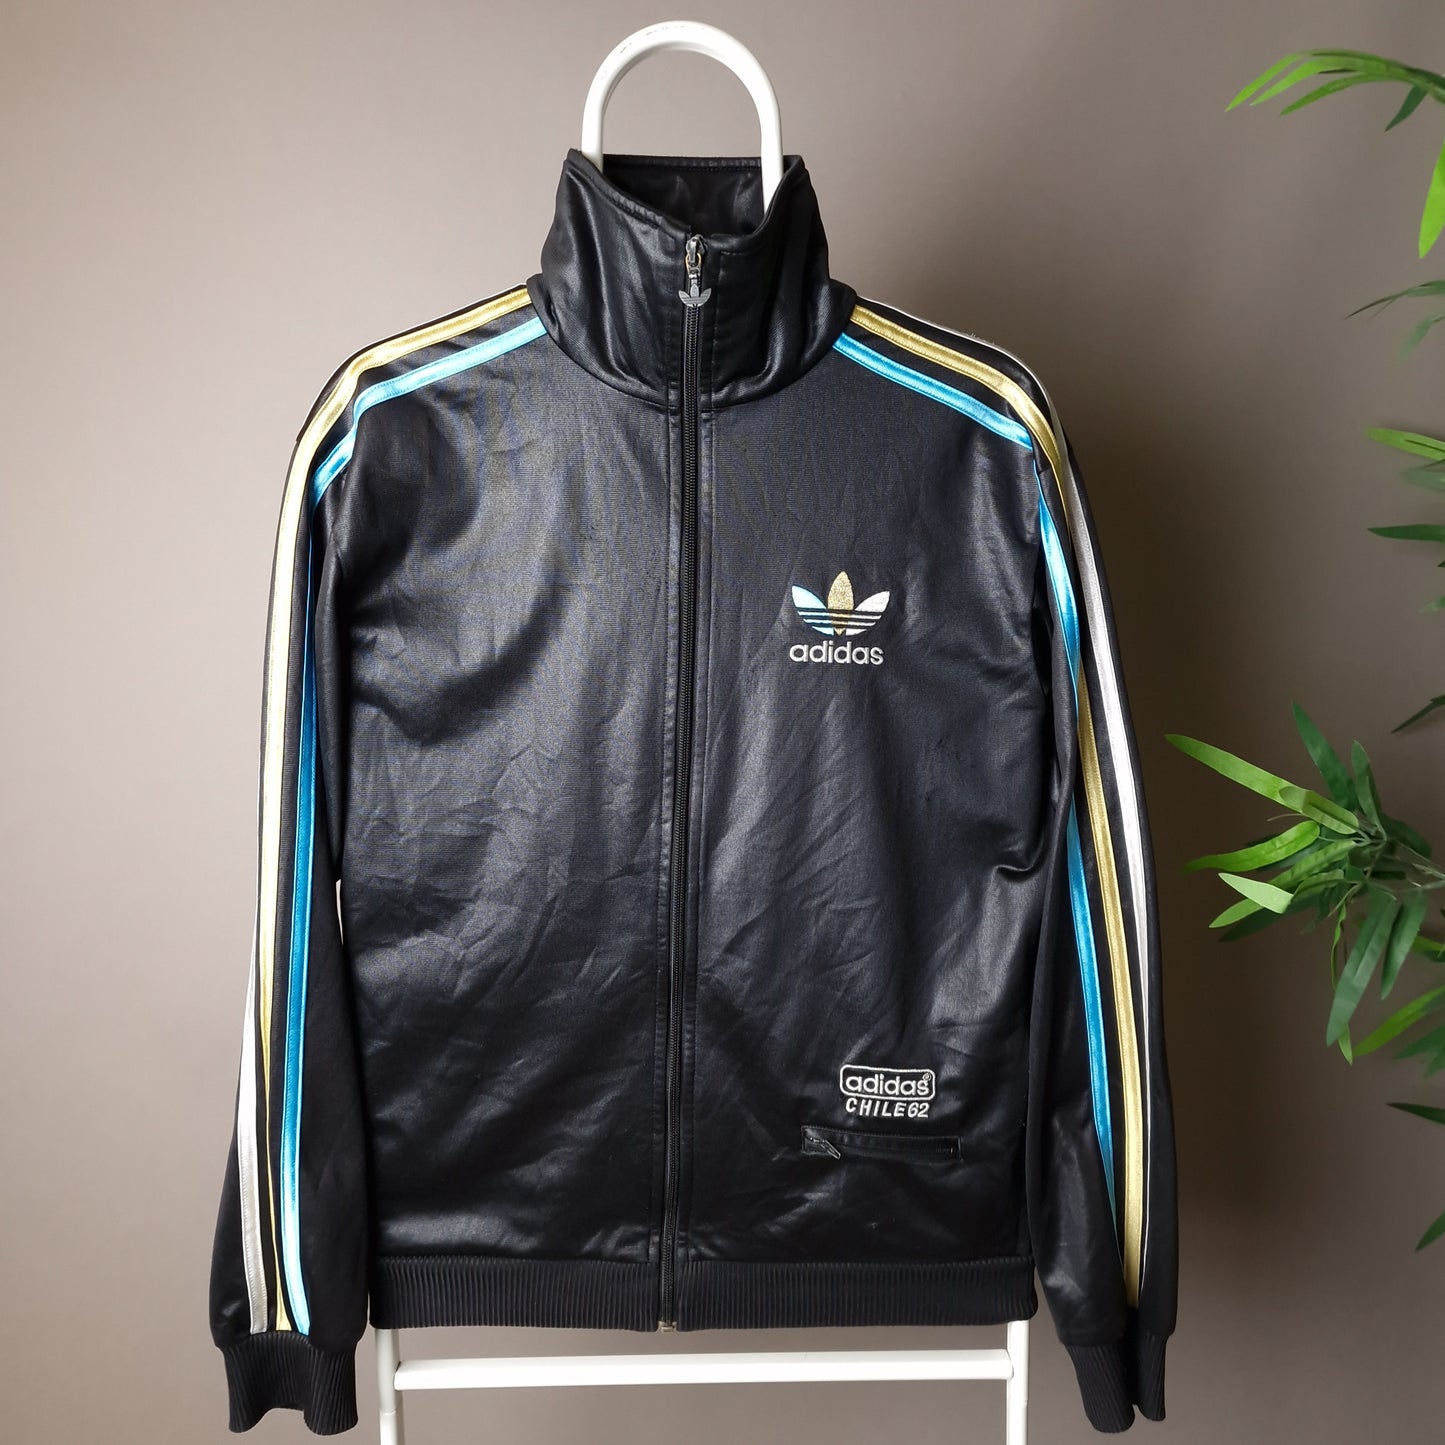 Vintage Adidas Chile 62 tack jacket in black - XS